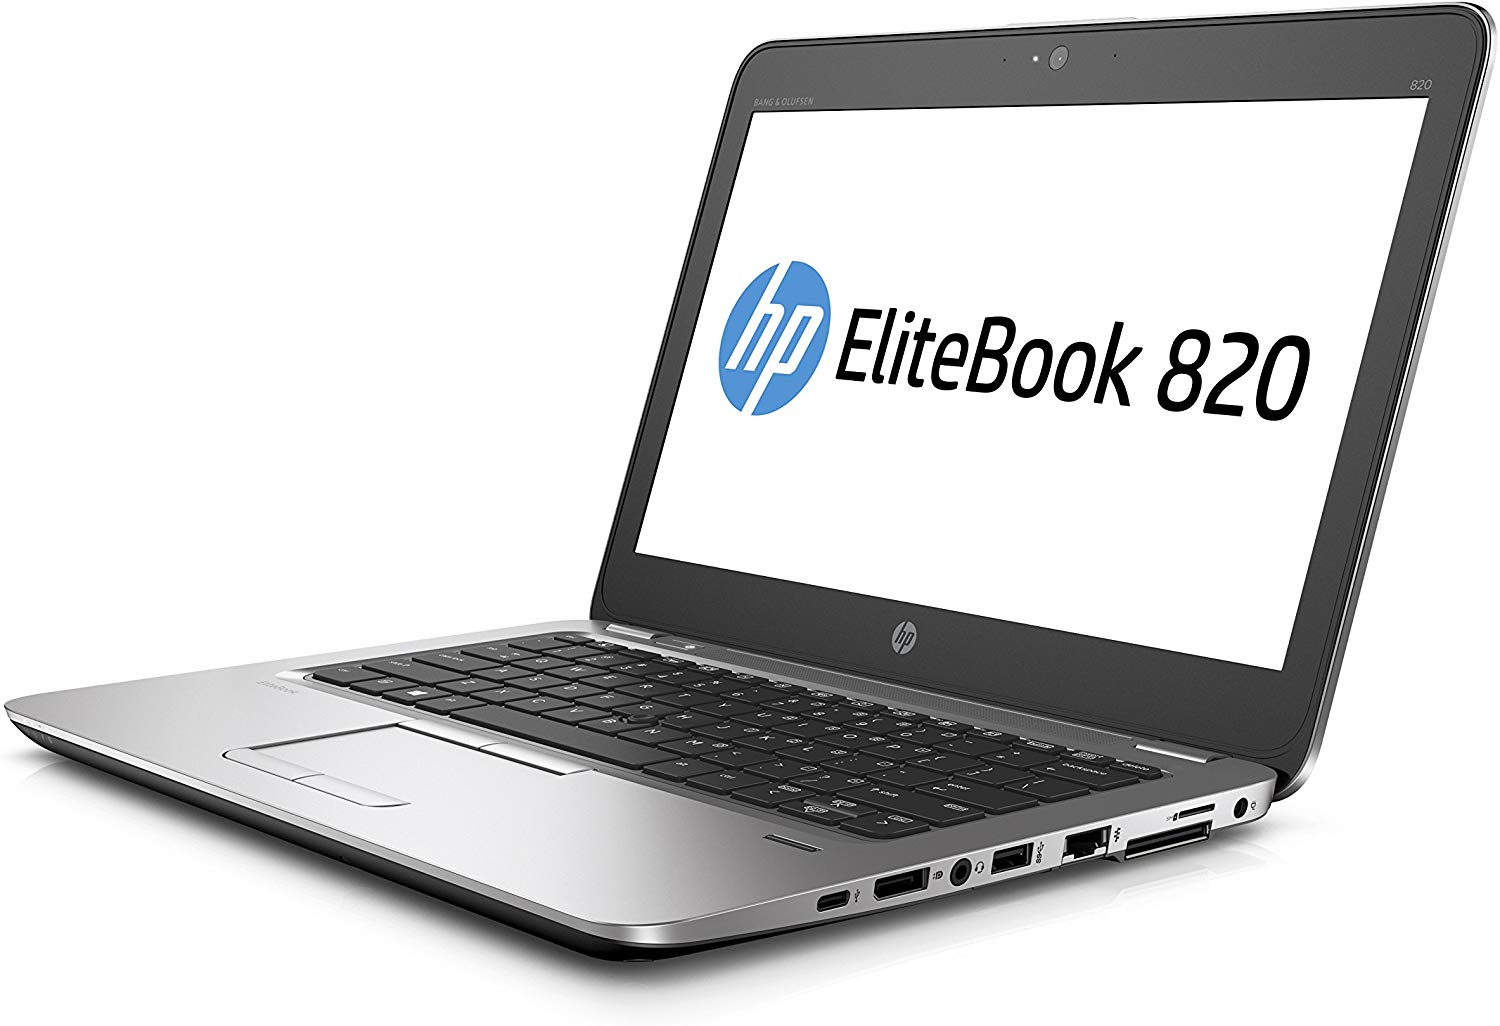 HP EliteBook 820 G3 NOTEBOOK INTEL CORE I5 6300 8GB DDR4 256GB SSD WINDOWS 10 PRO Grado B